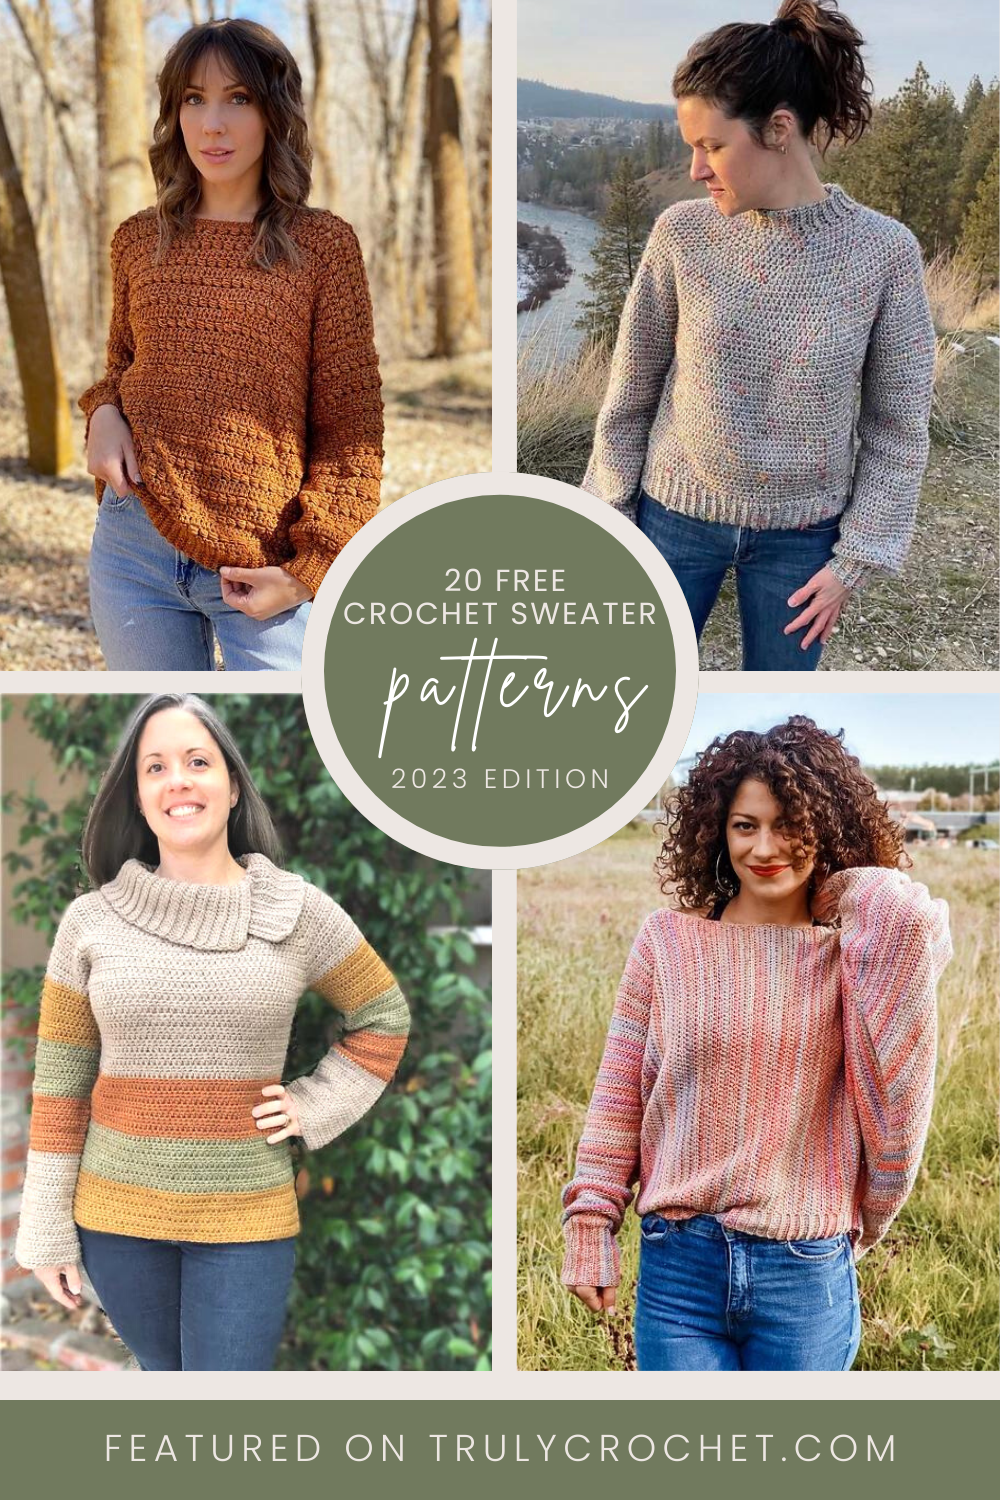 20 free crochet sweater patterns - 2023 edition